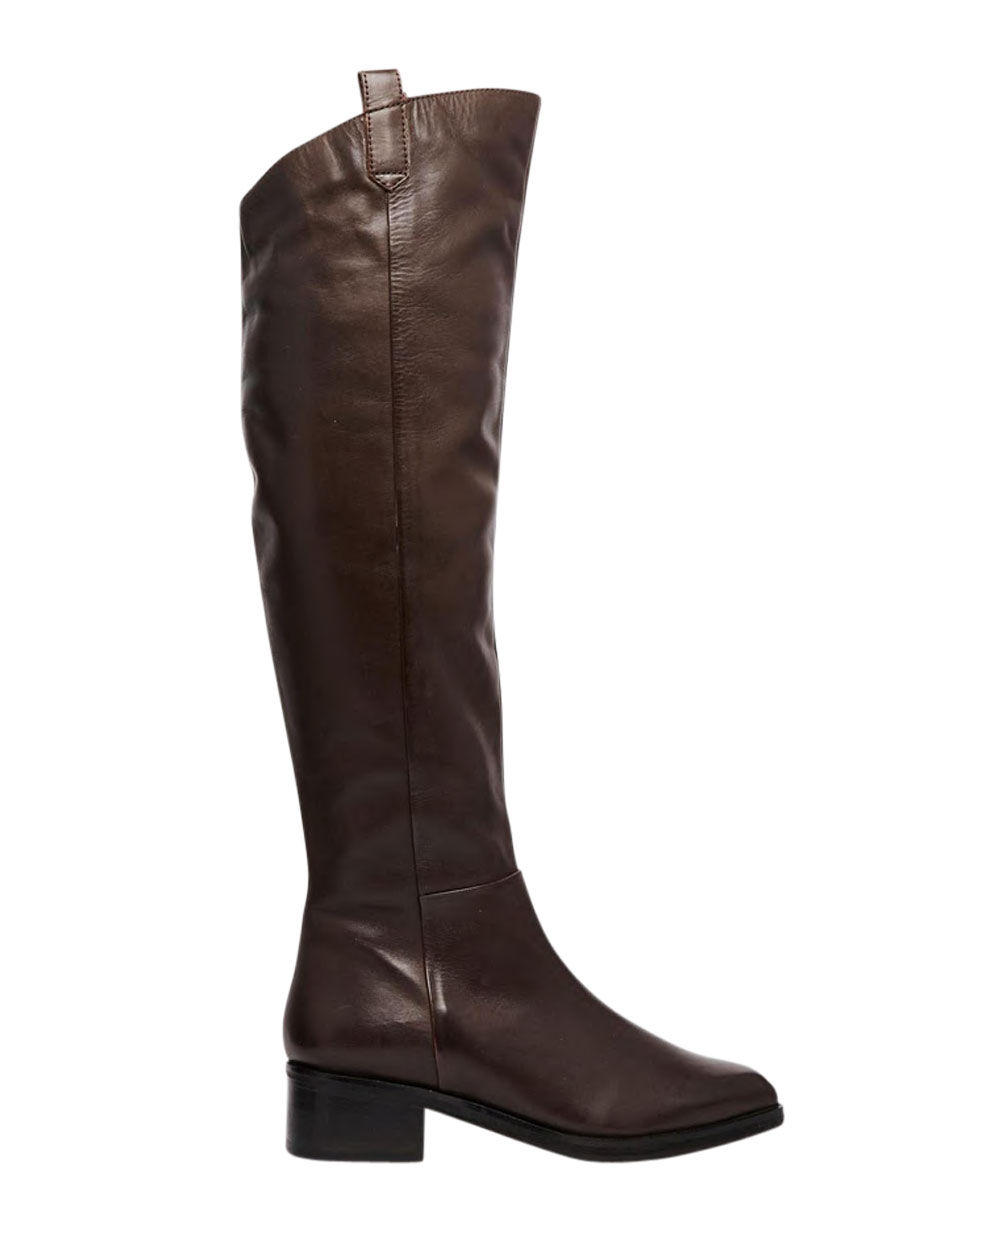 ASOS knee-high boots